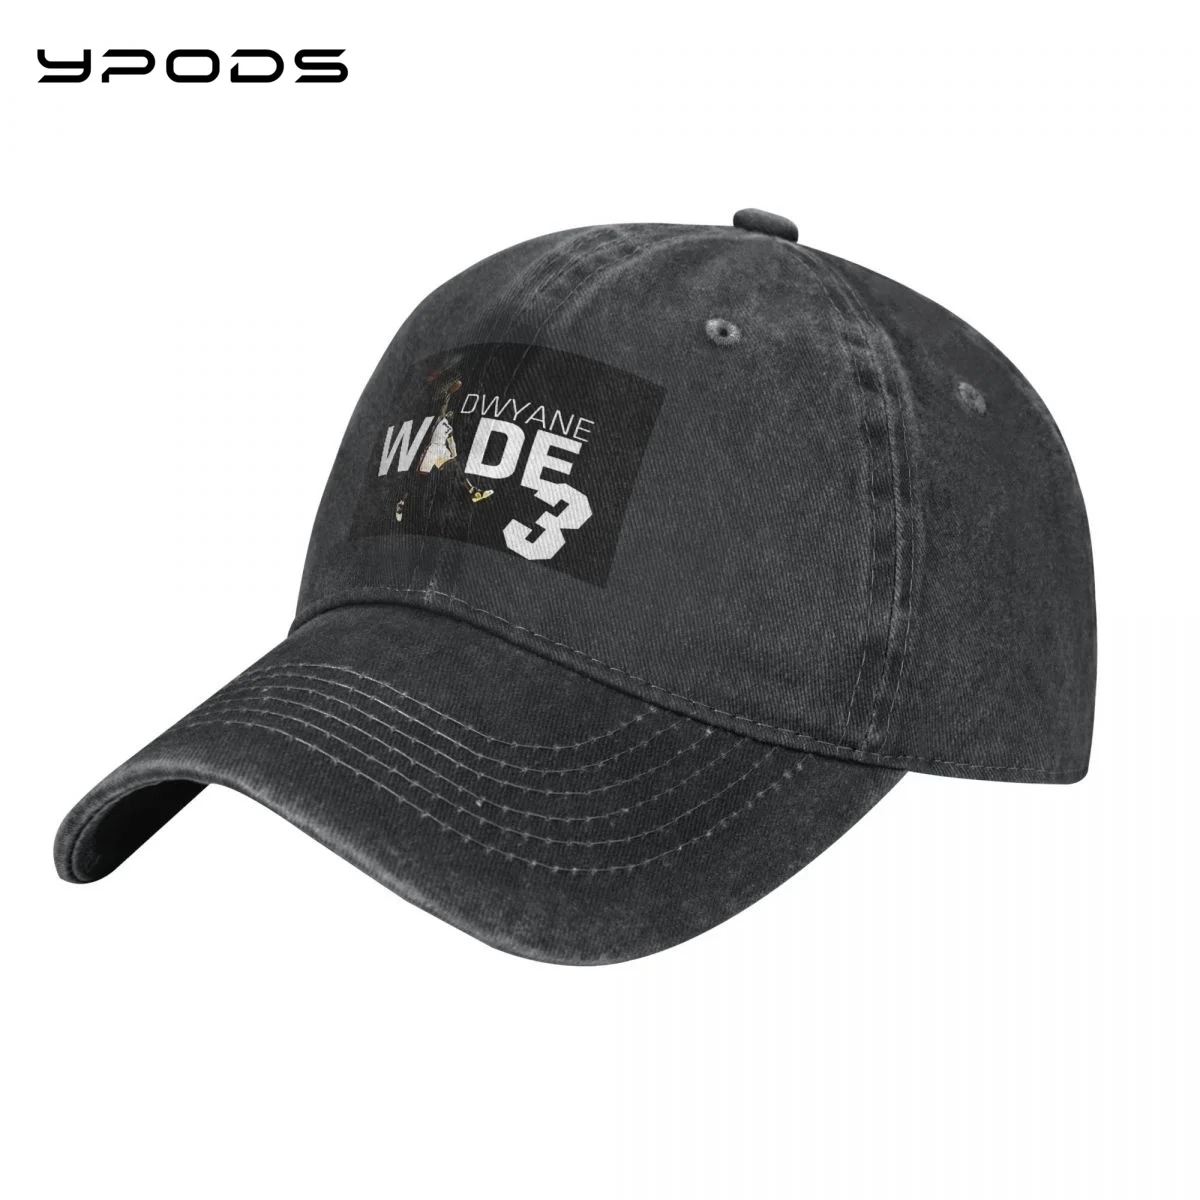 

Dwyane Wade Baseball Caps for Men Women Vintage Washed Cotton Dad Hats Print Snapback Cap Hat